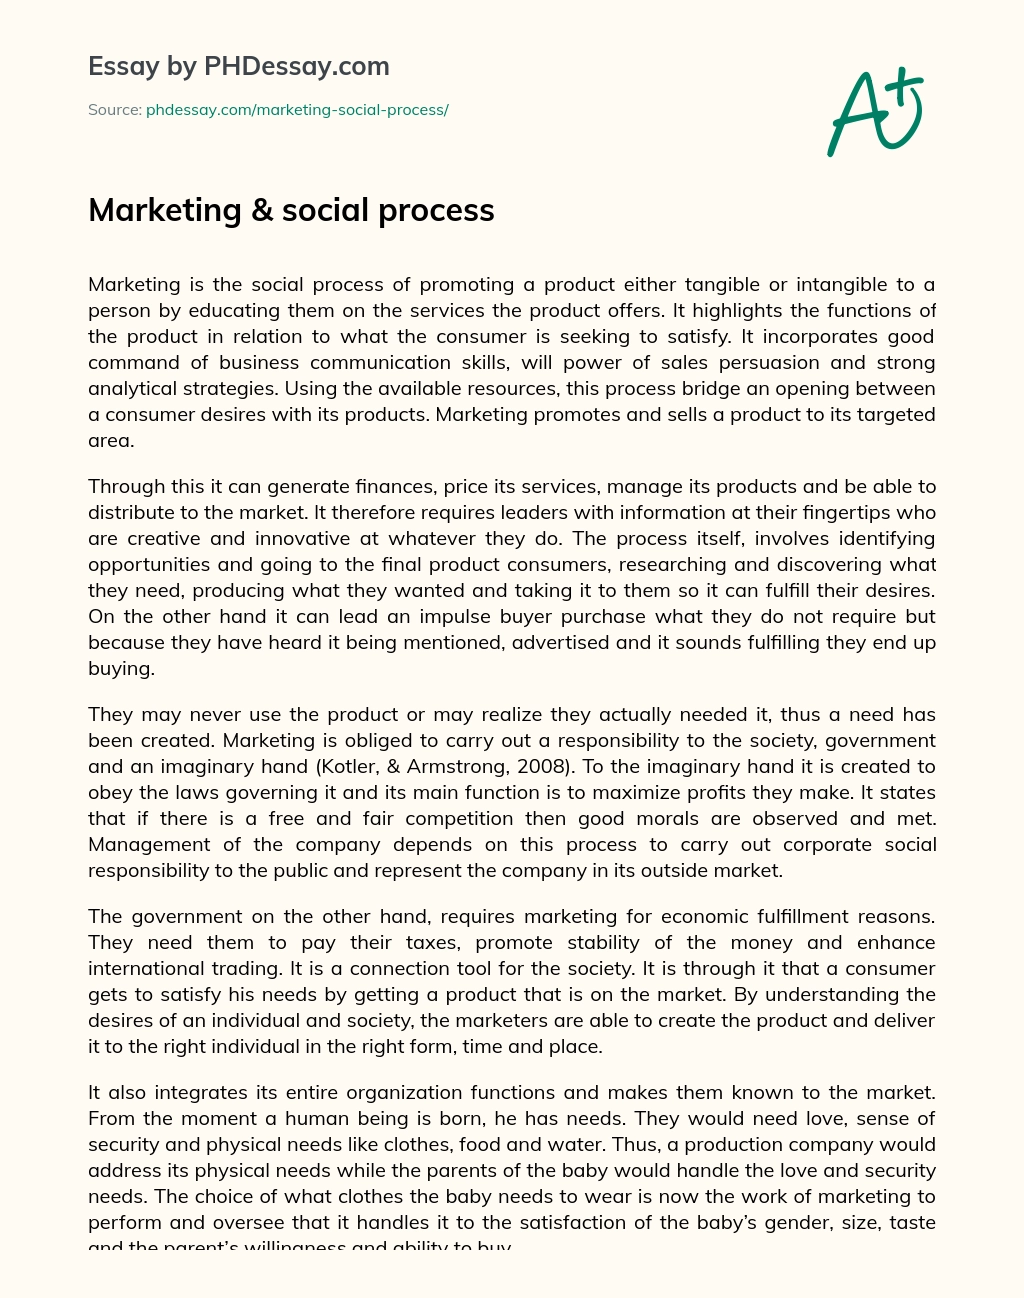 Marketing & social process essay